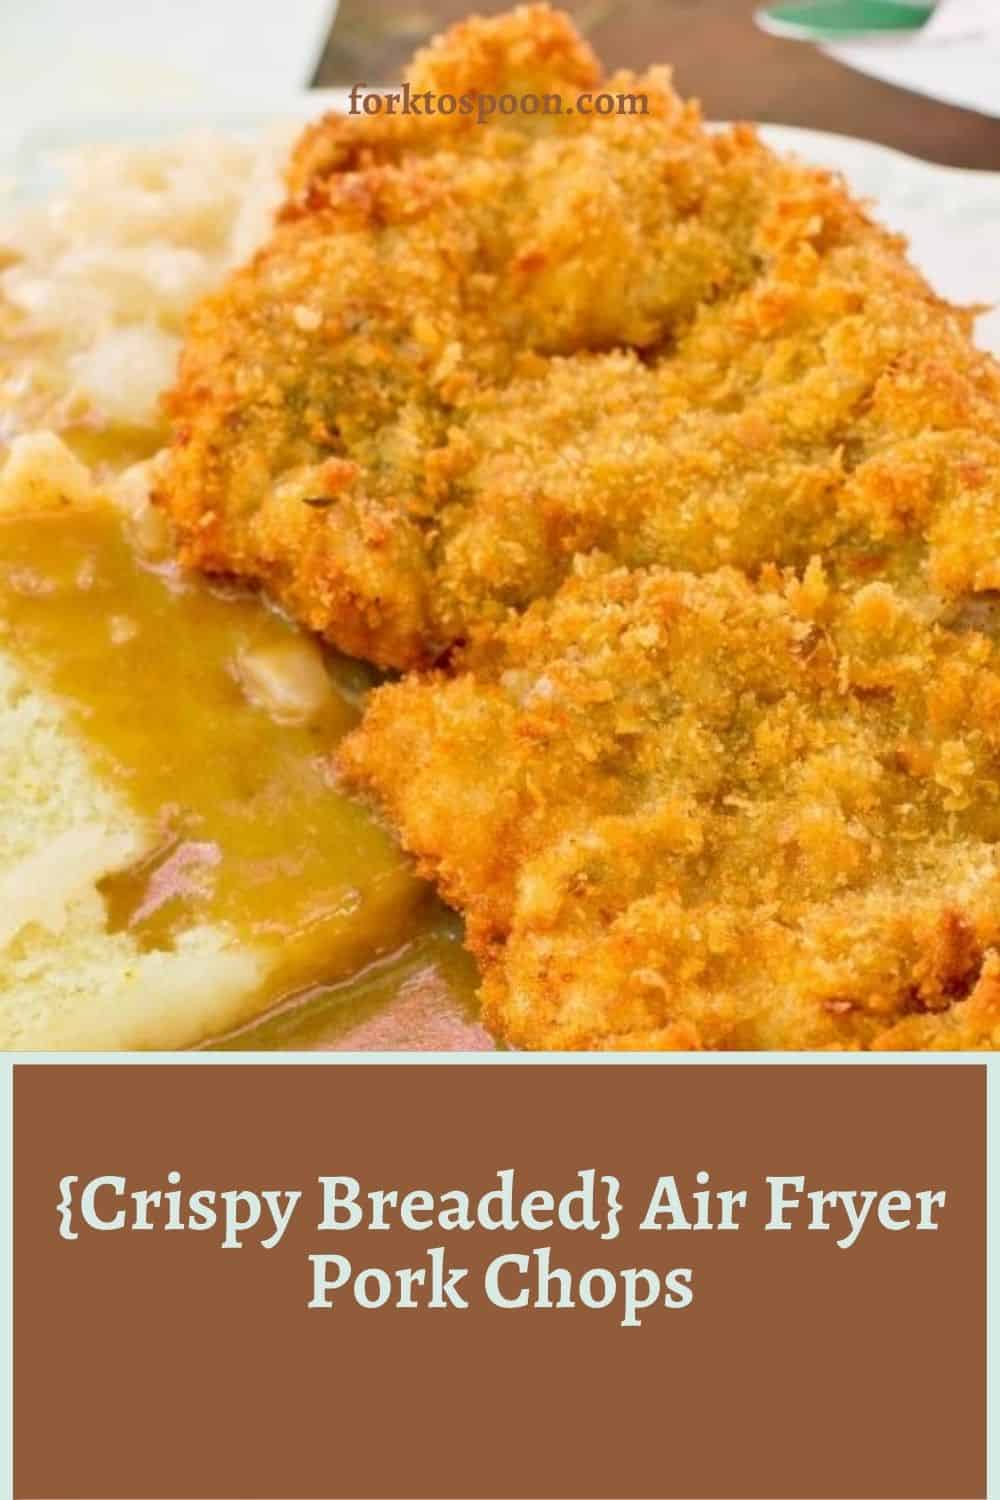 Crispy Breaded Pork Chops in Air Fryer - Fork To Spoon